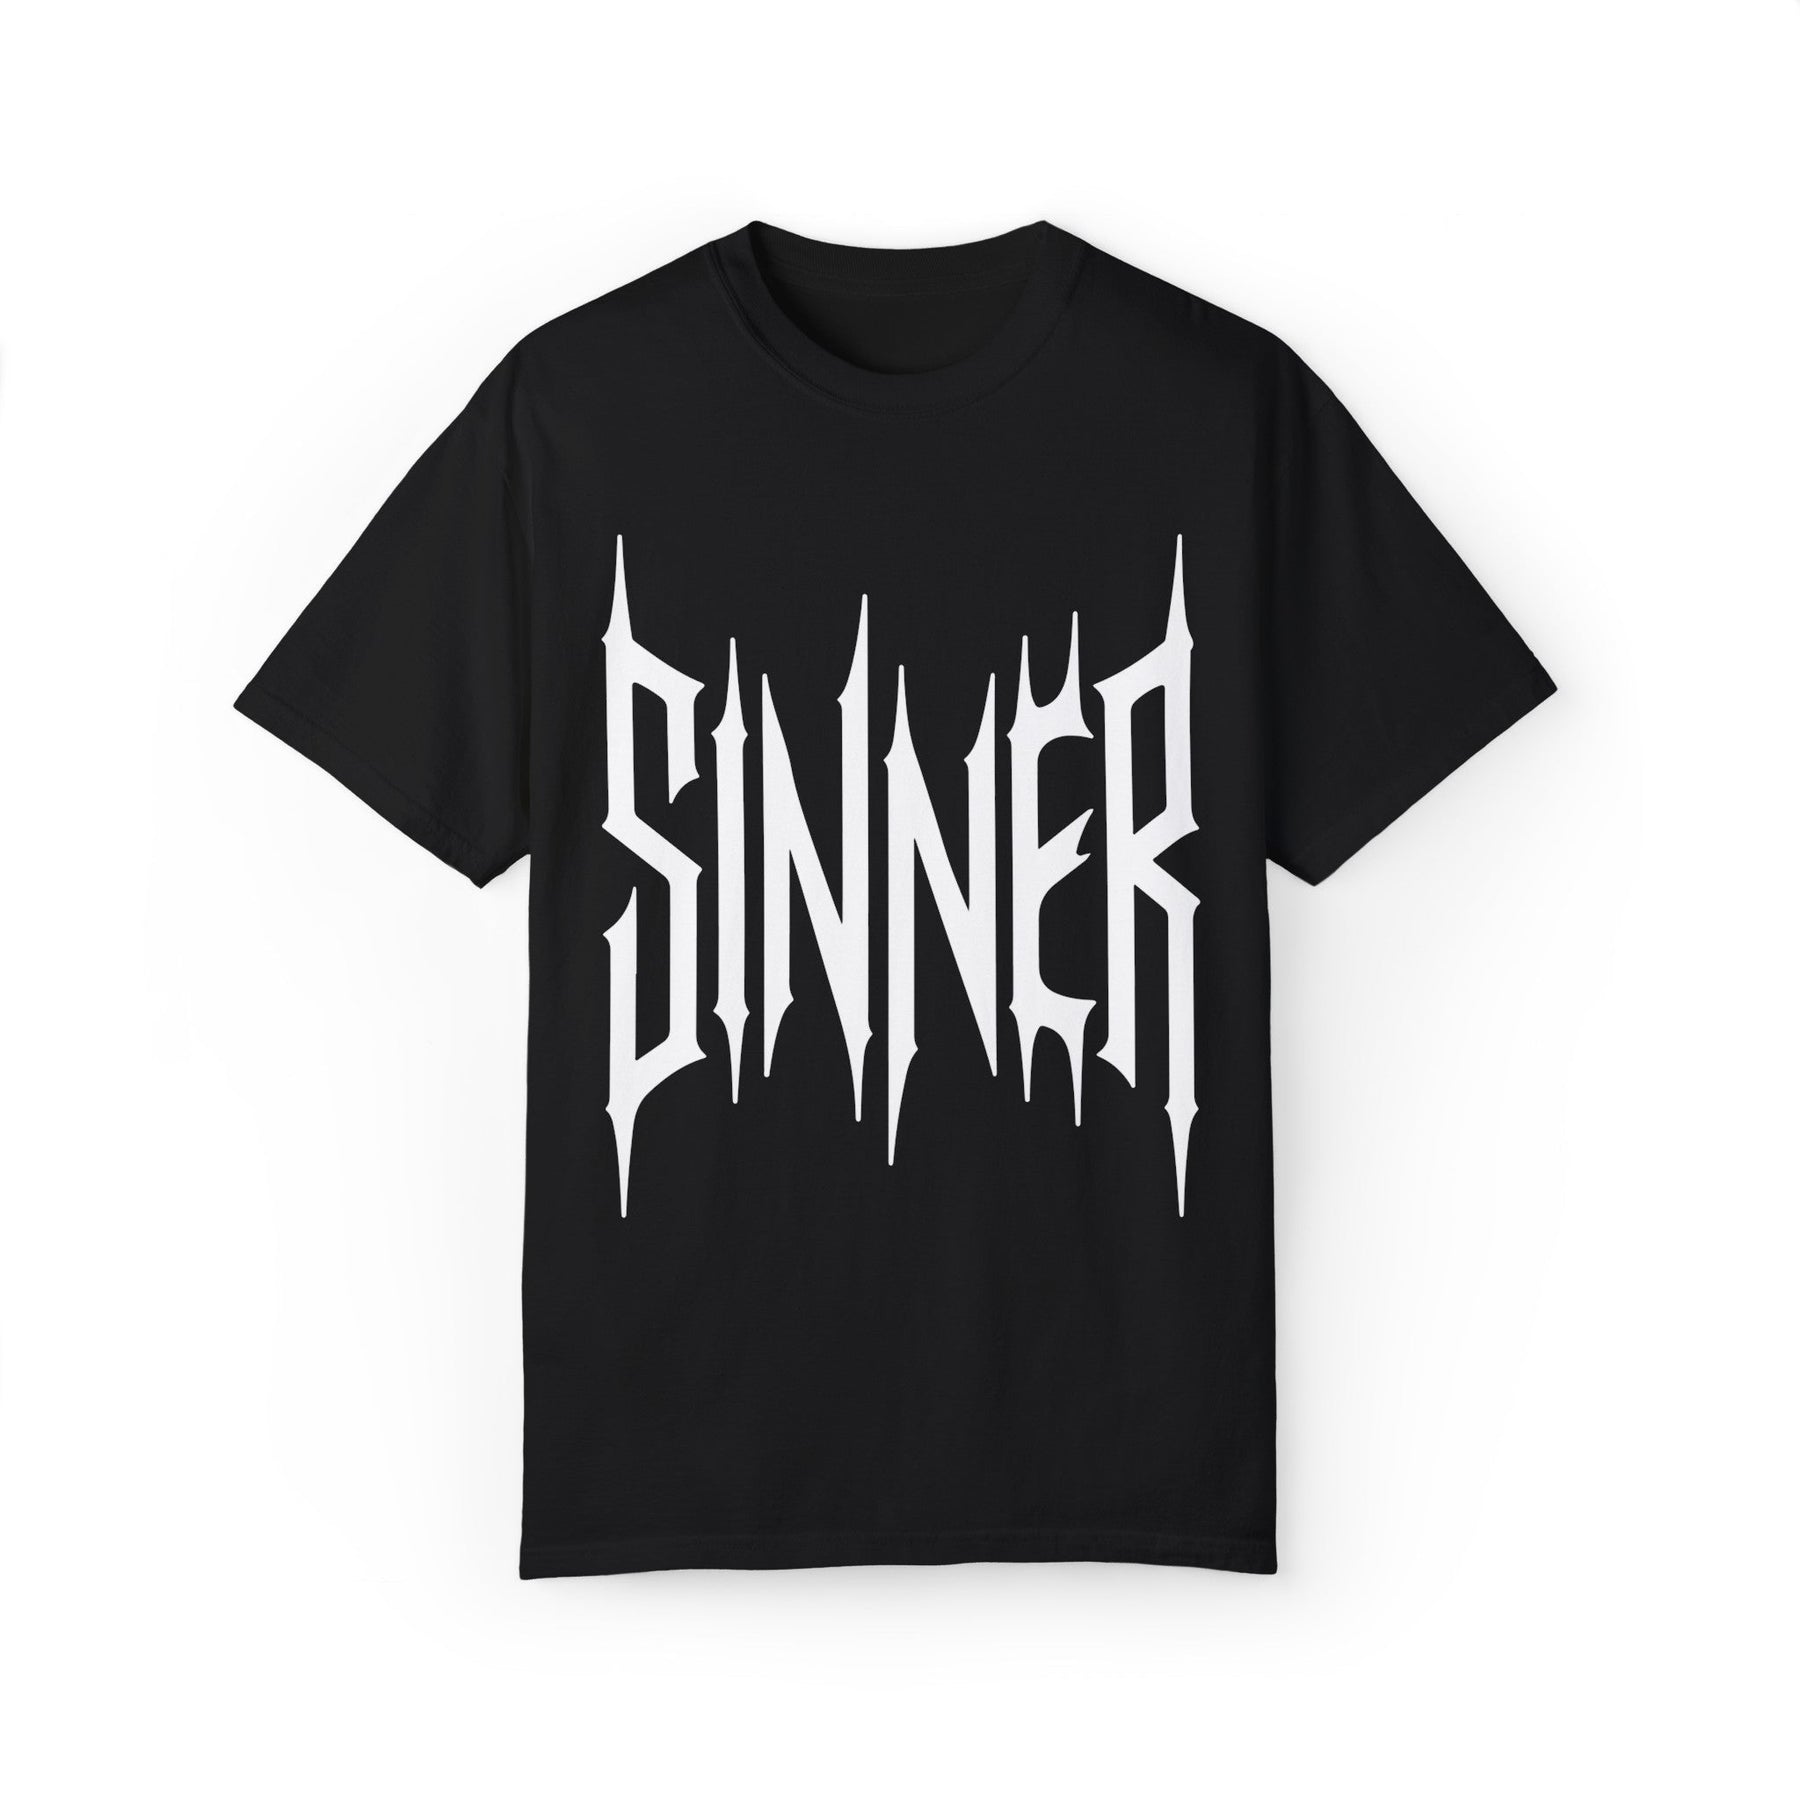 Sinner Oversized Beefy Tee - Goth Cloth Co.T - Shirt71026898232935645316